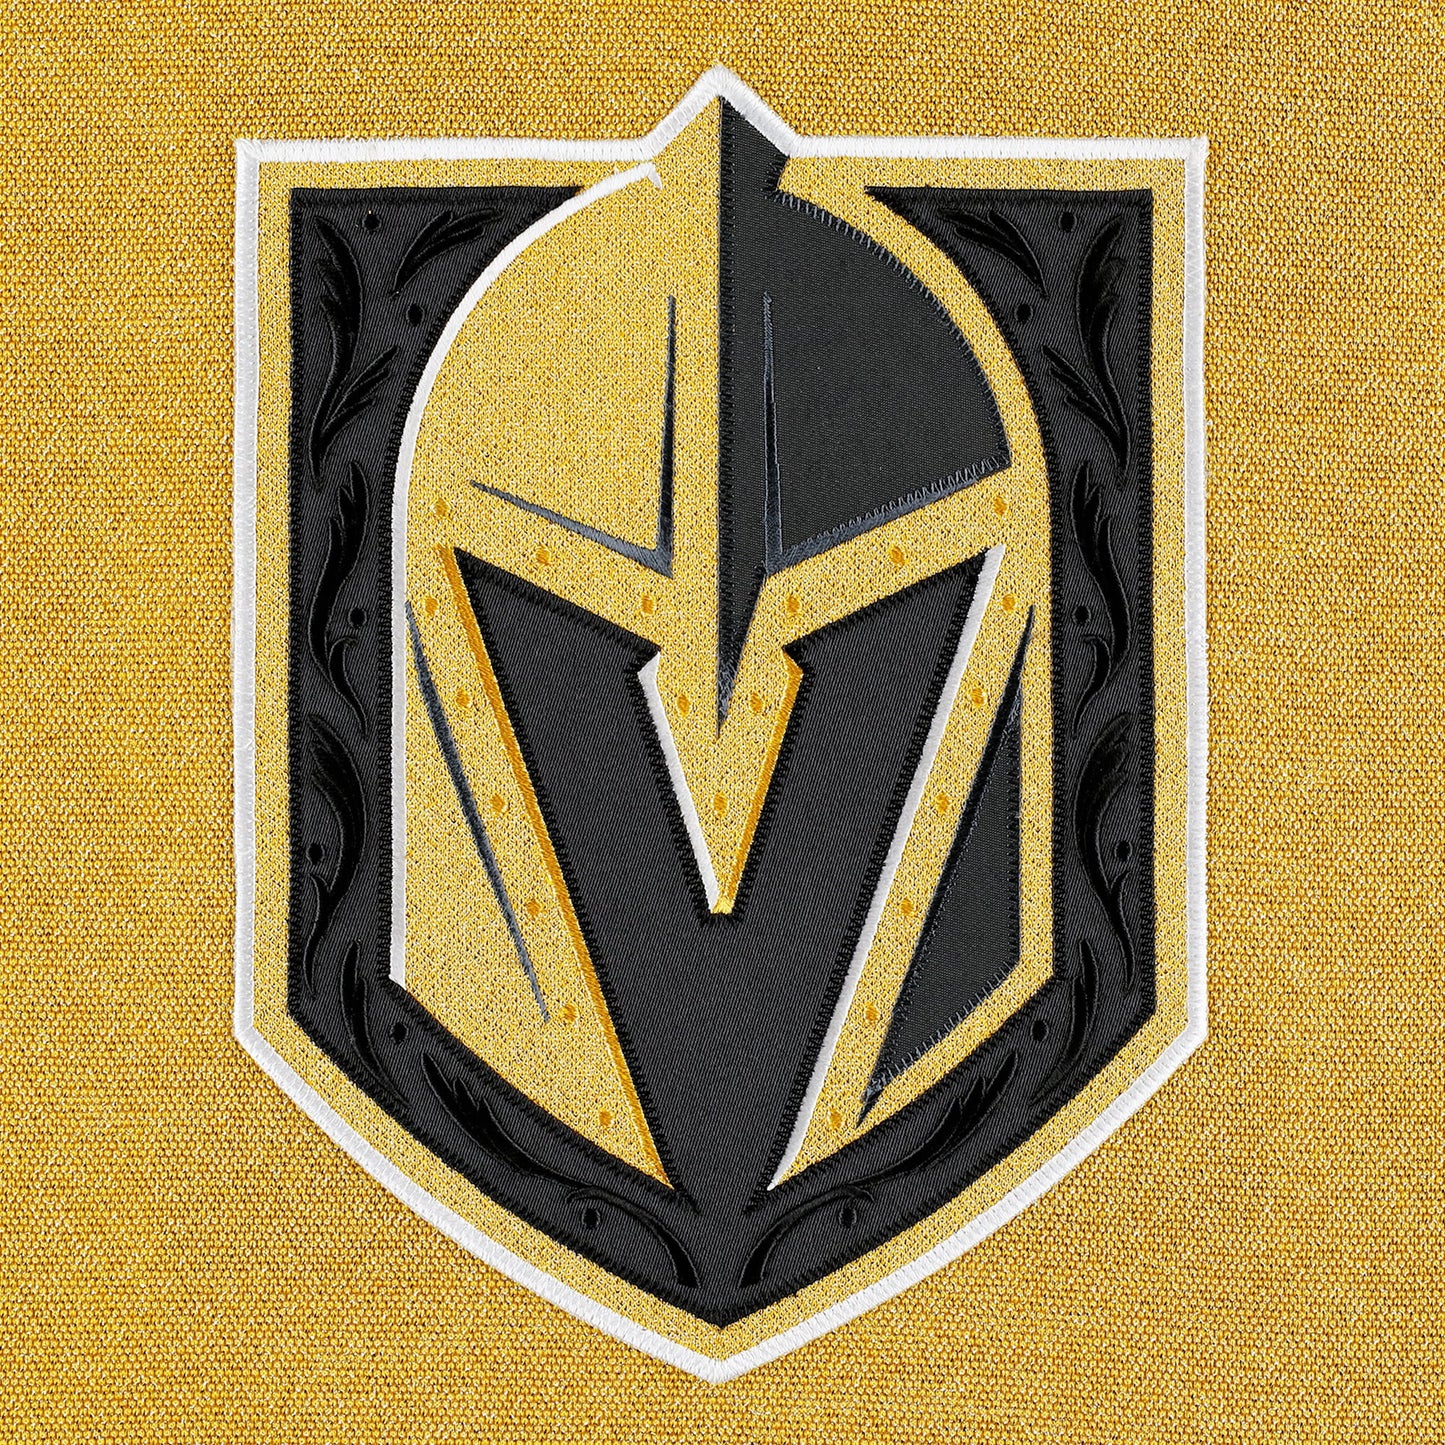 William Karlsson Vegas Golden Knights adidas Primegreen Authentic Pro Player Jersey - Gold